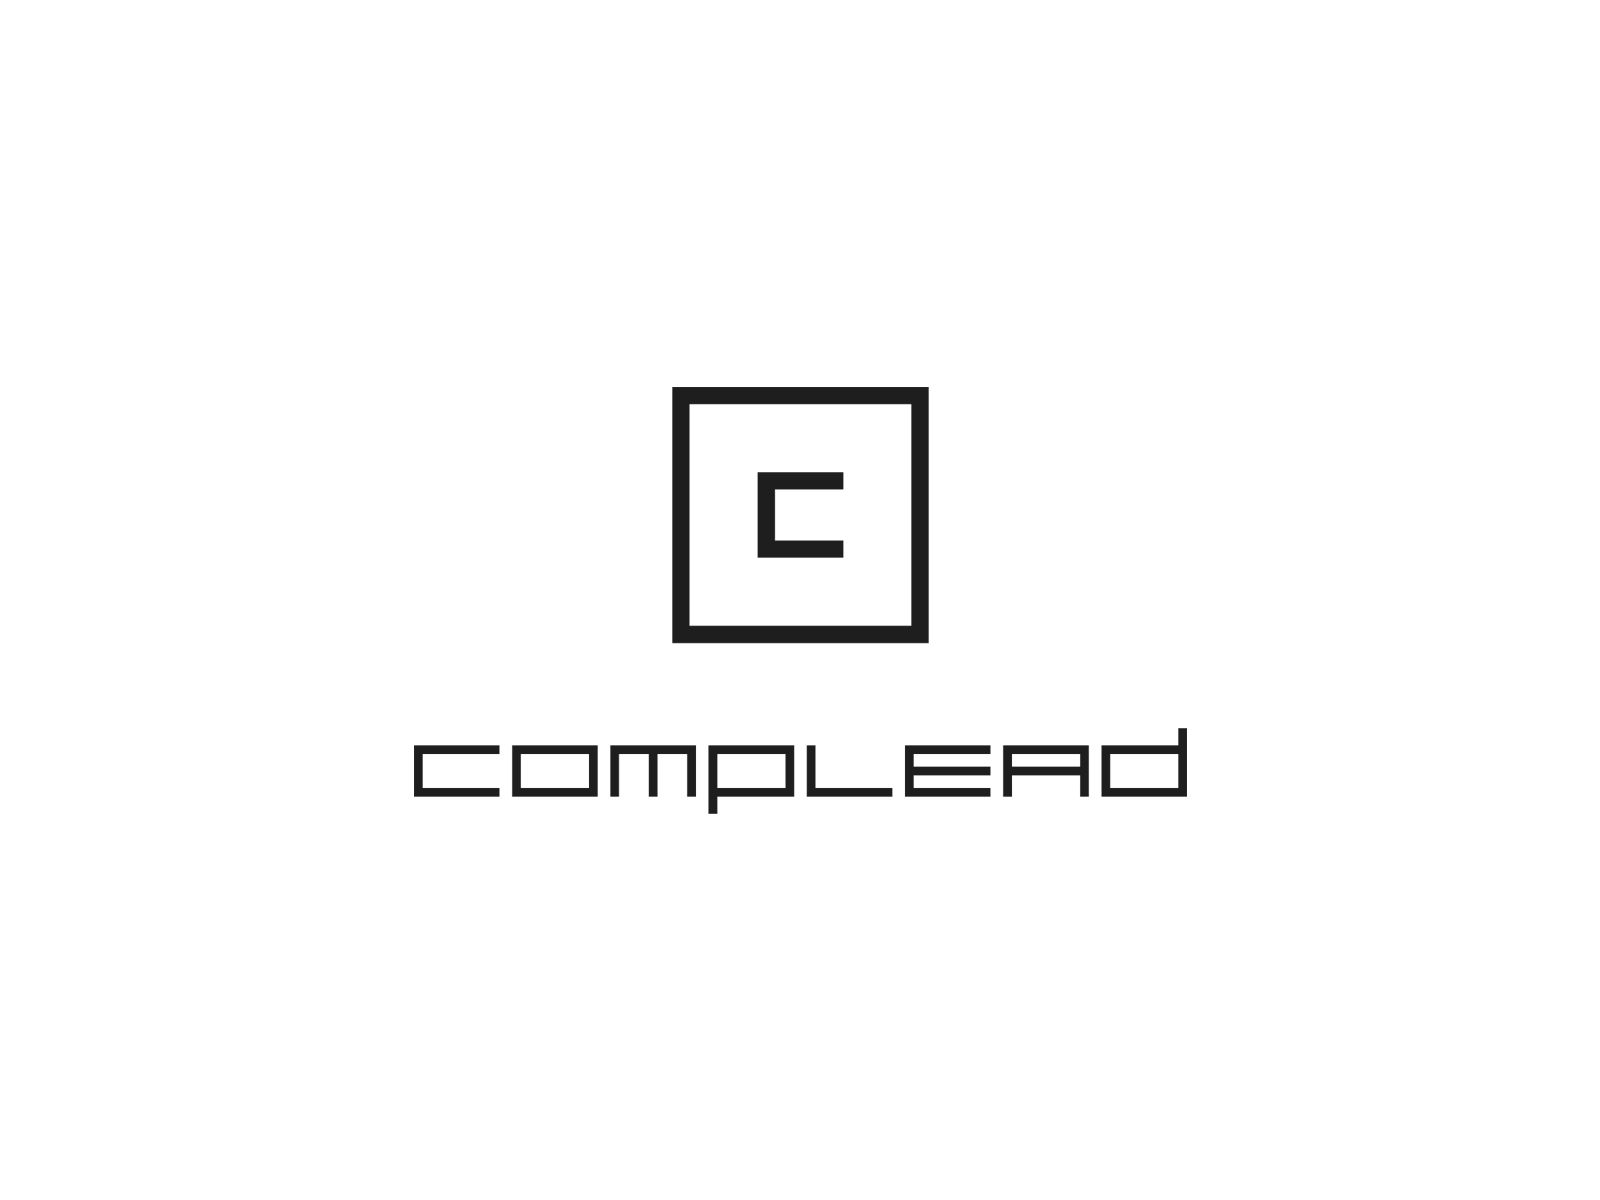 Логотип для CompLead - дизайнер ArtGusev